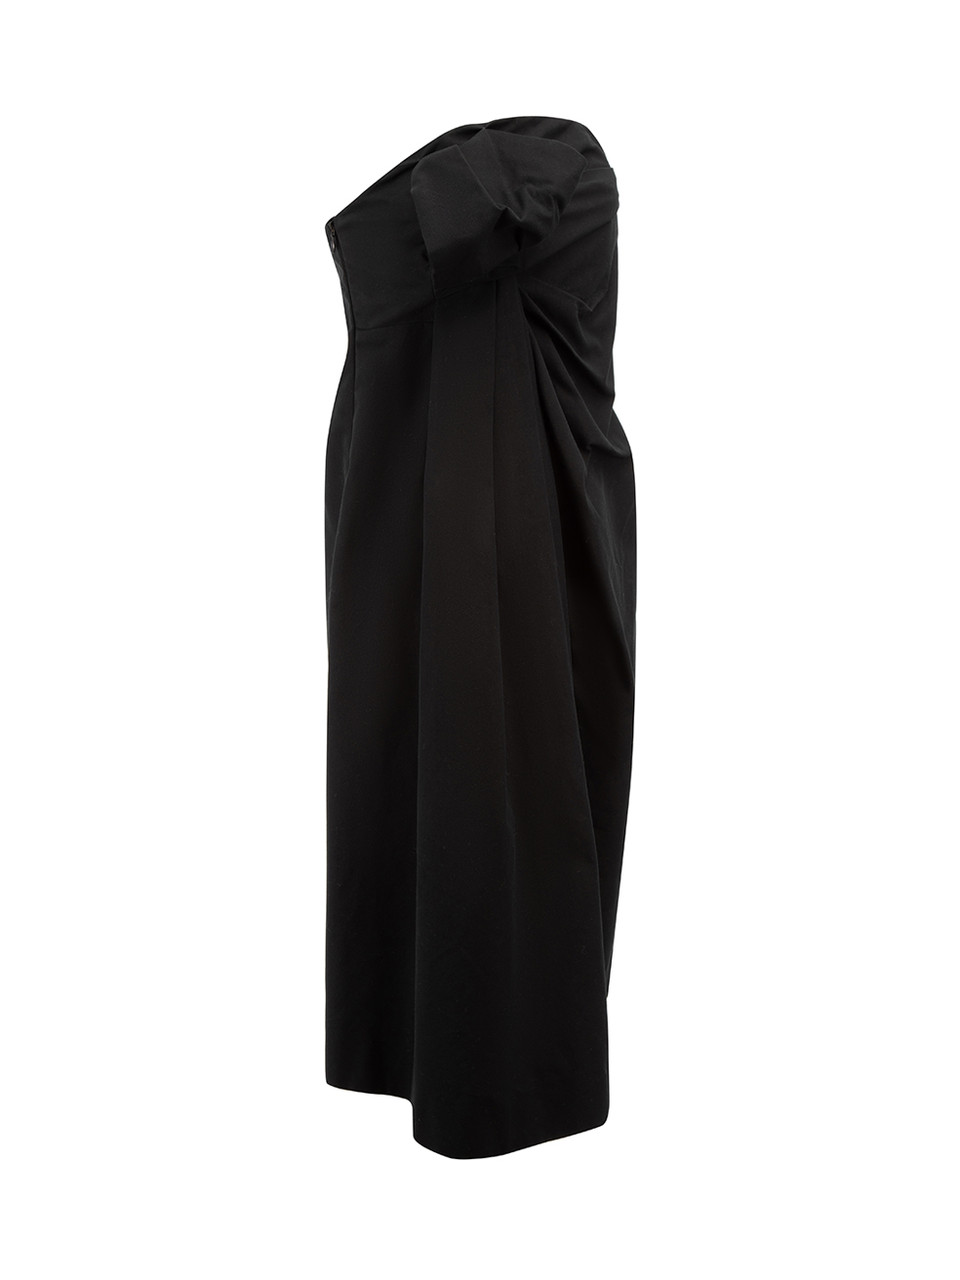 Chloé Black Strapless Evening Mini Dress